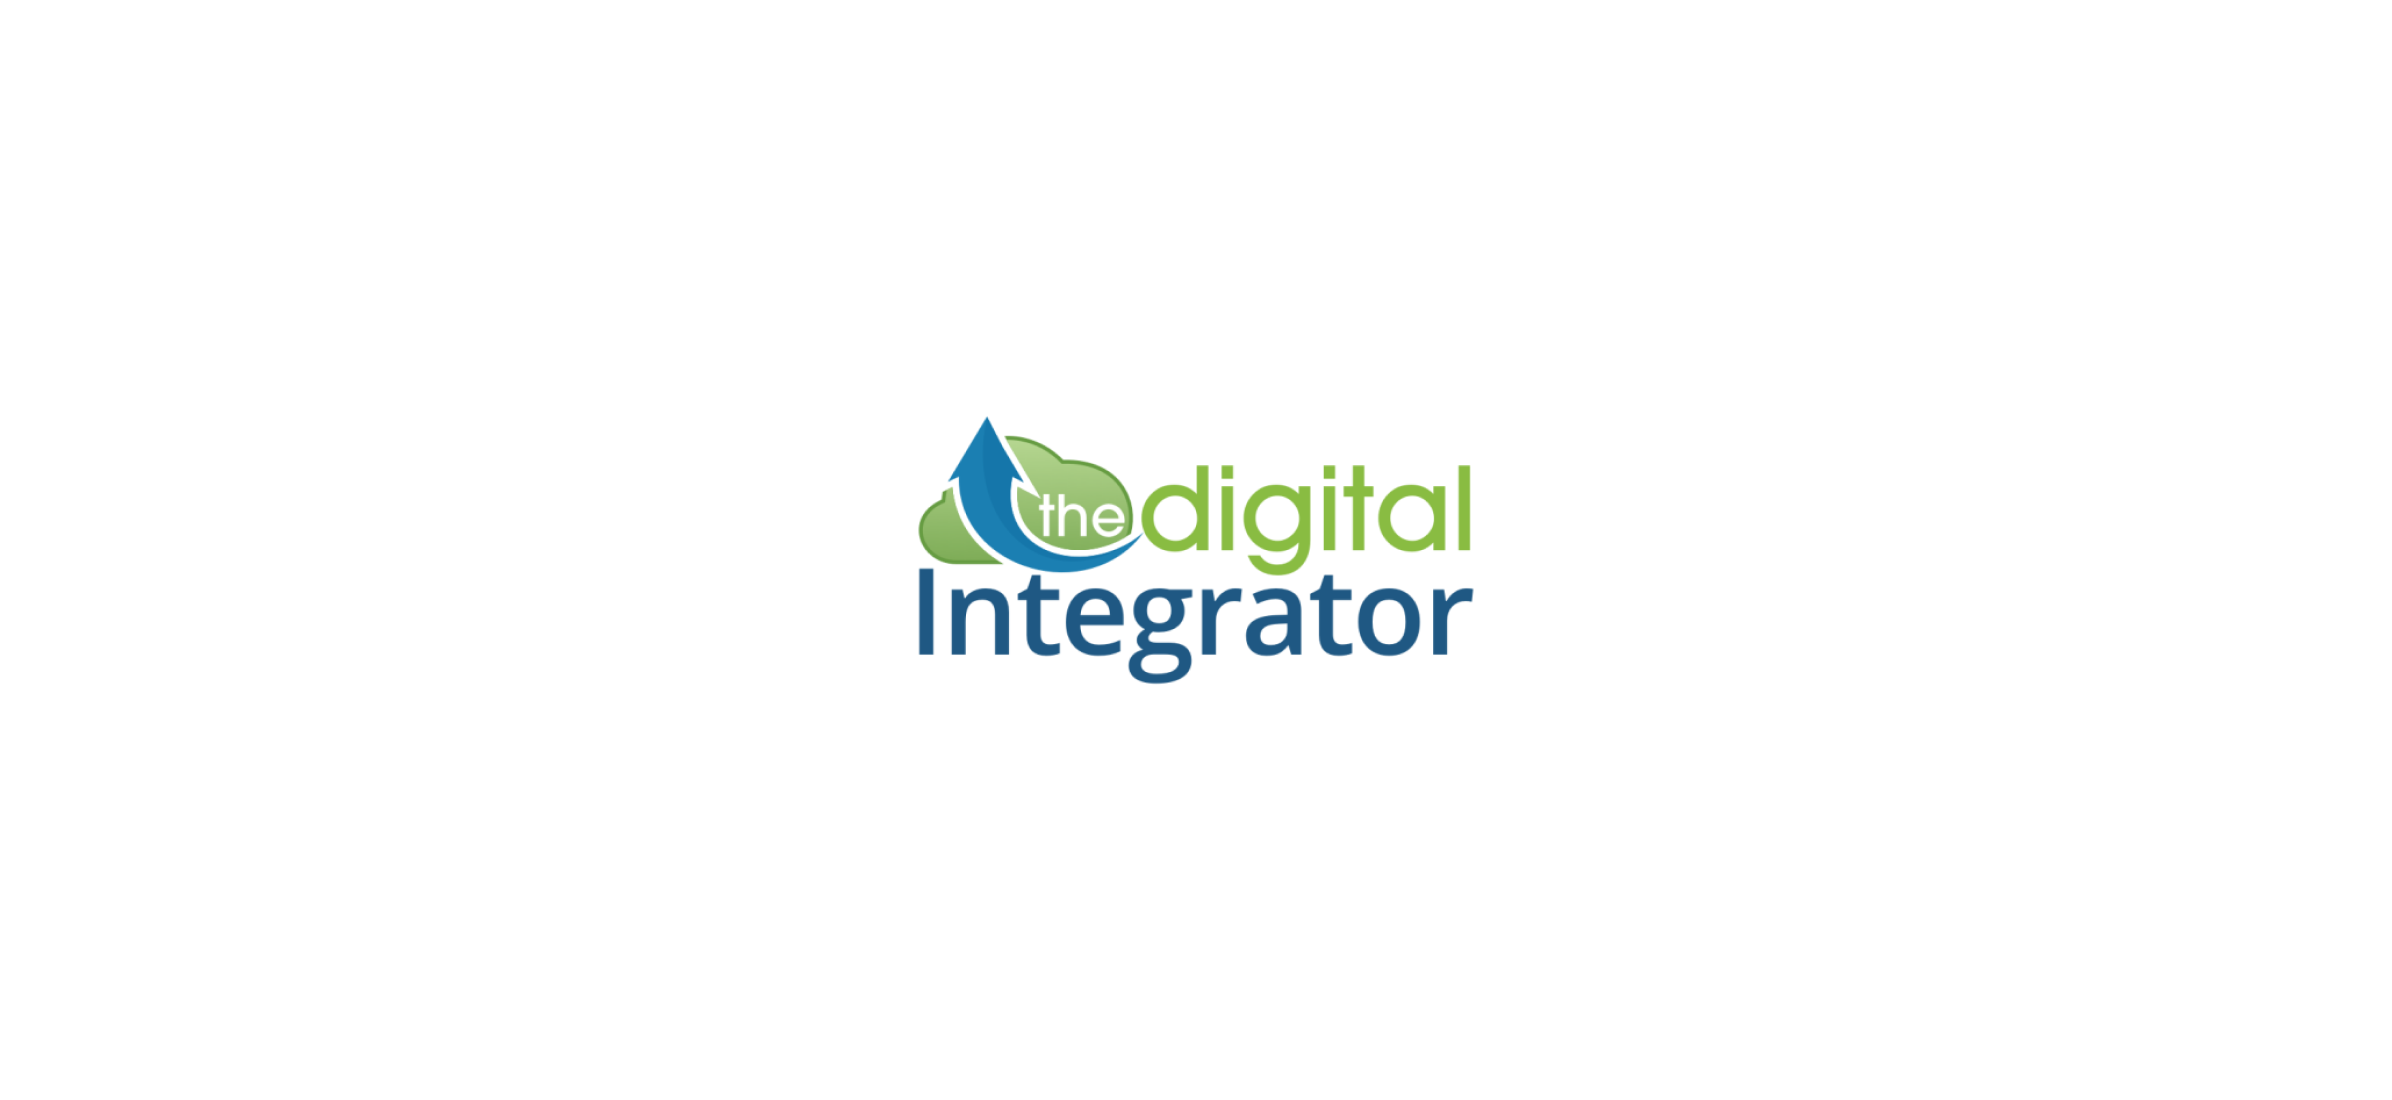 The digital Integrator logo